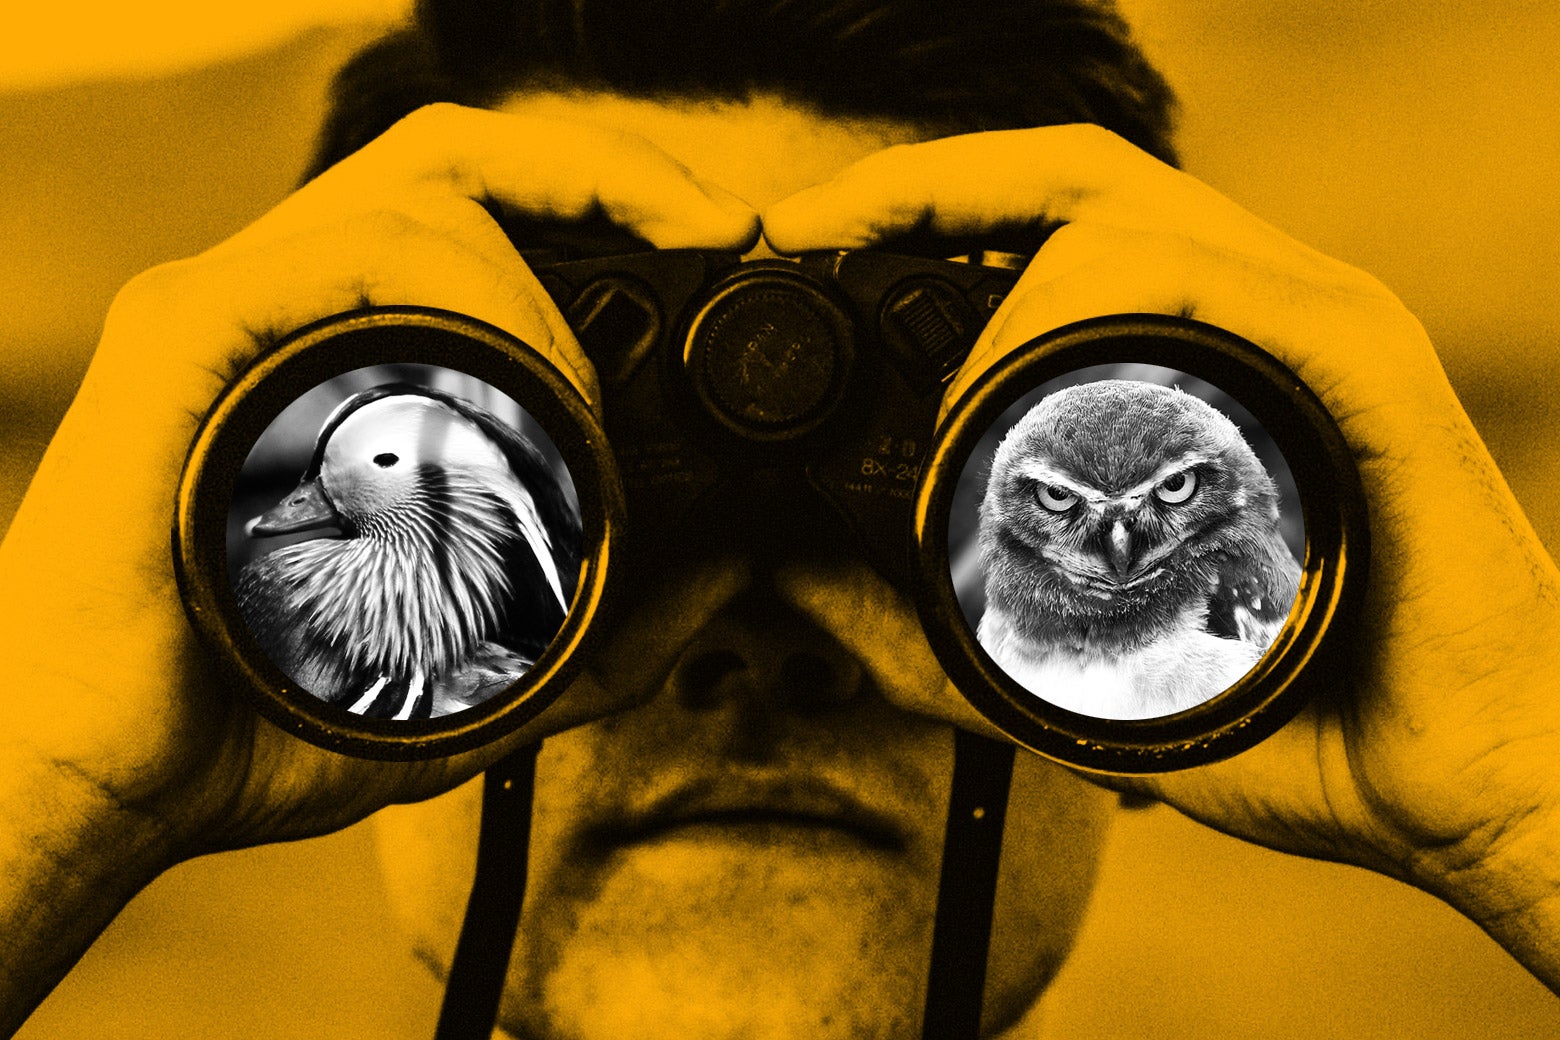 Photo illustration of owls as seen through binoculars.